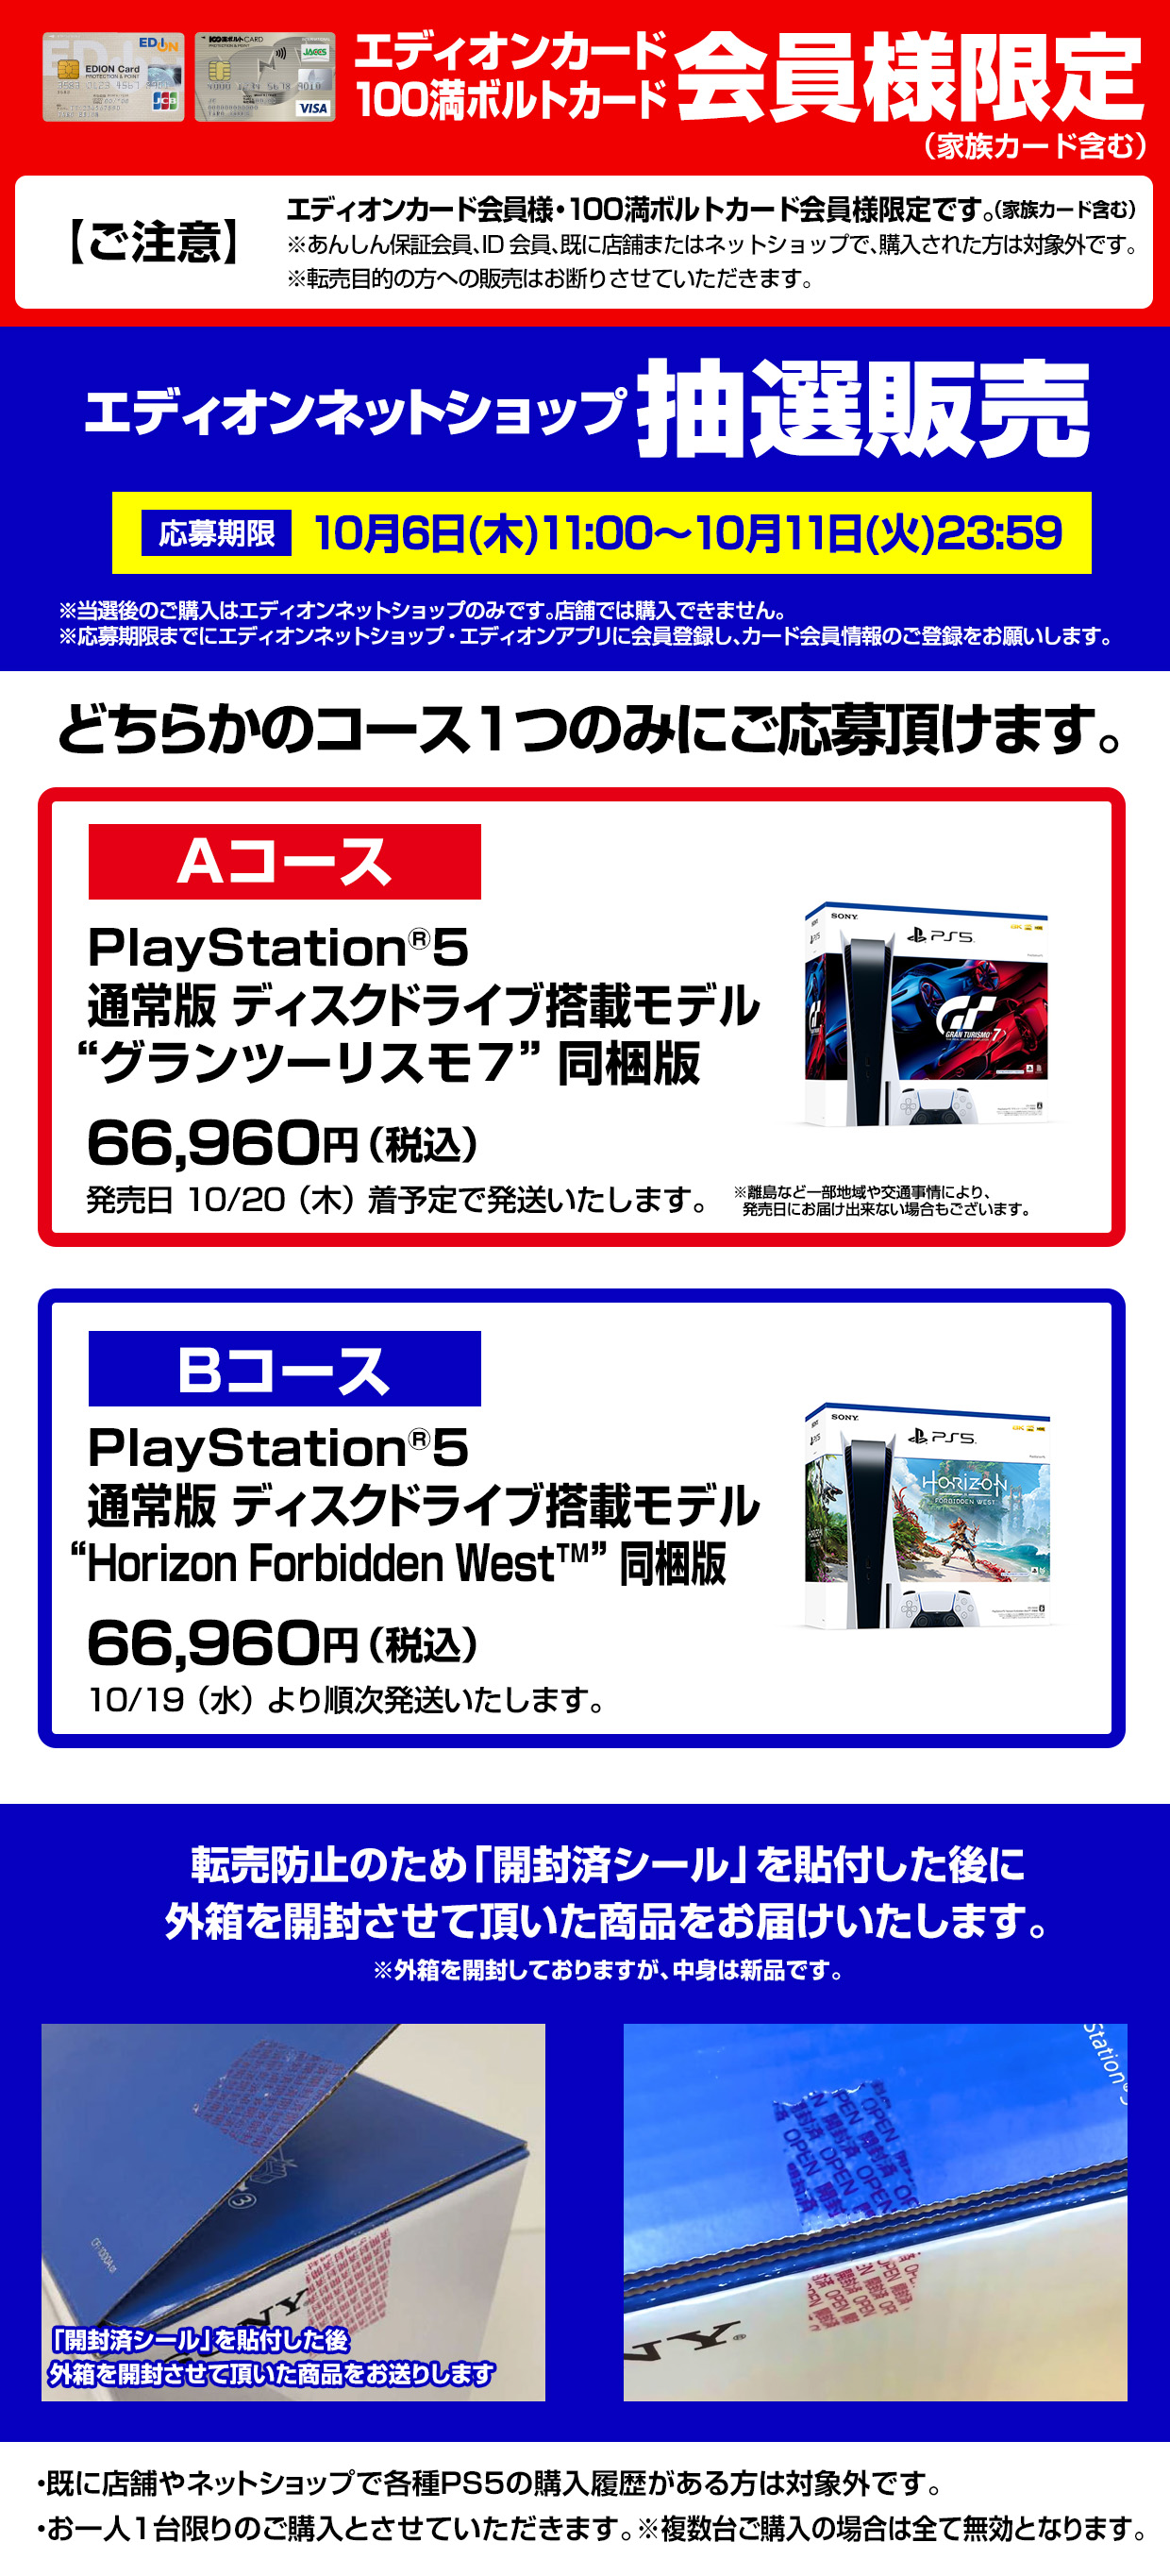 【PS5】『プレイステーション 5 “グランツーリスモ7”同梱版 & “Horizon Forbidden West™”同梱版』の抽選販売！【エディオンネットショップ】PlayStation 5